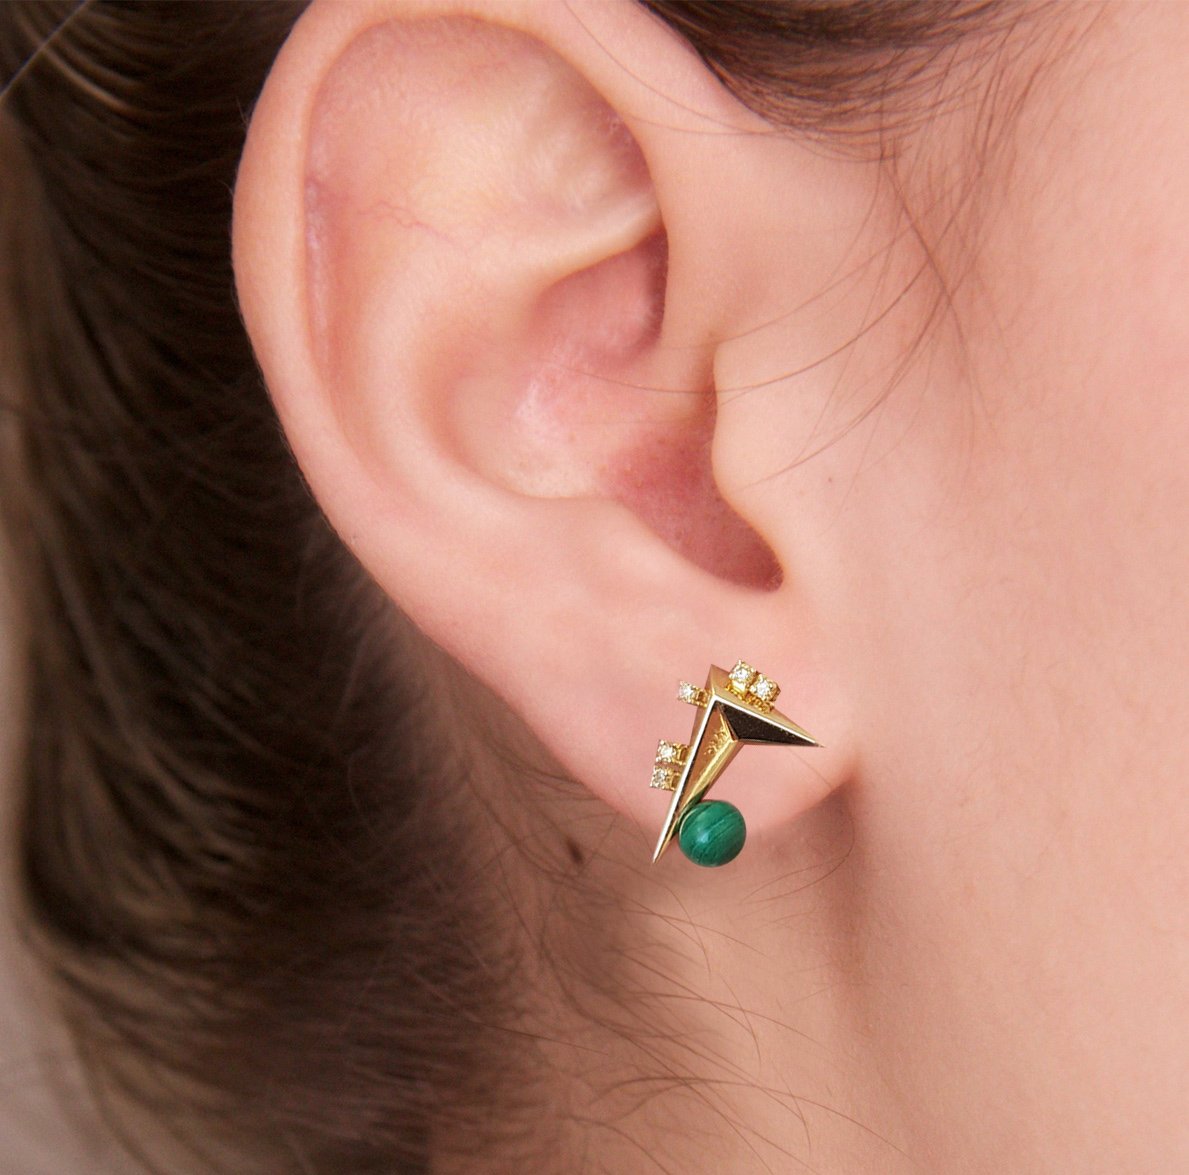 Mini-boom-mono-earring-lynsh-jewelry